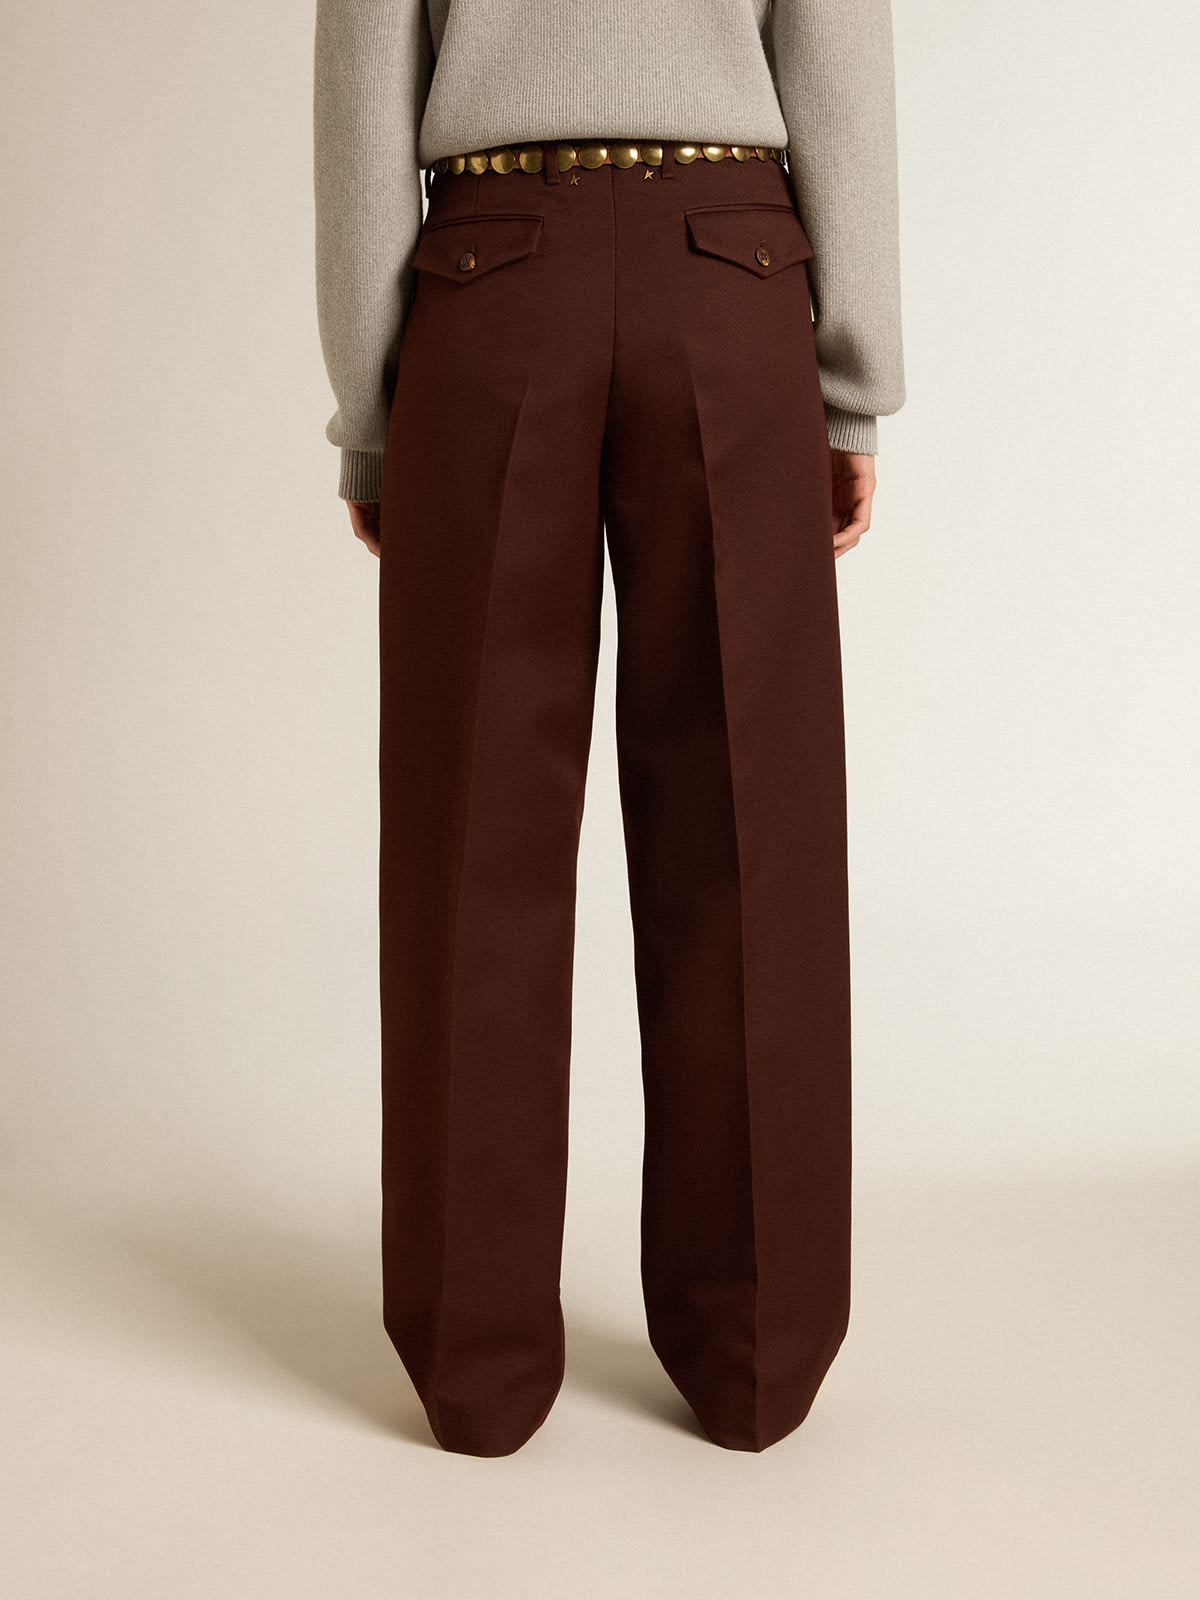 Golden Goose - Women's pants in coffee-colored wool gabardine in 